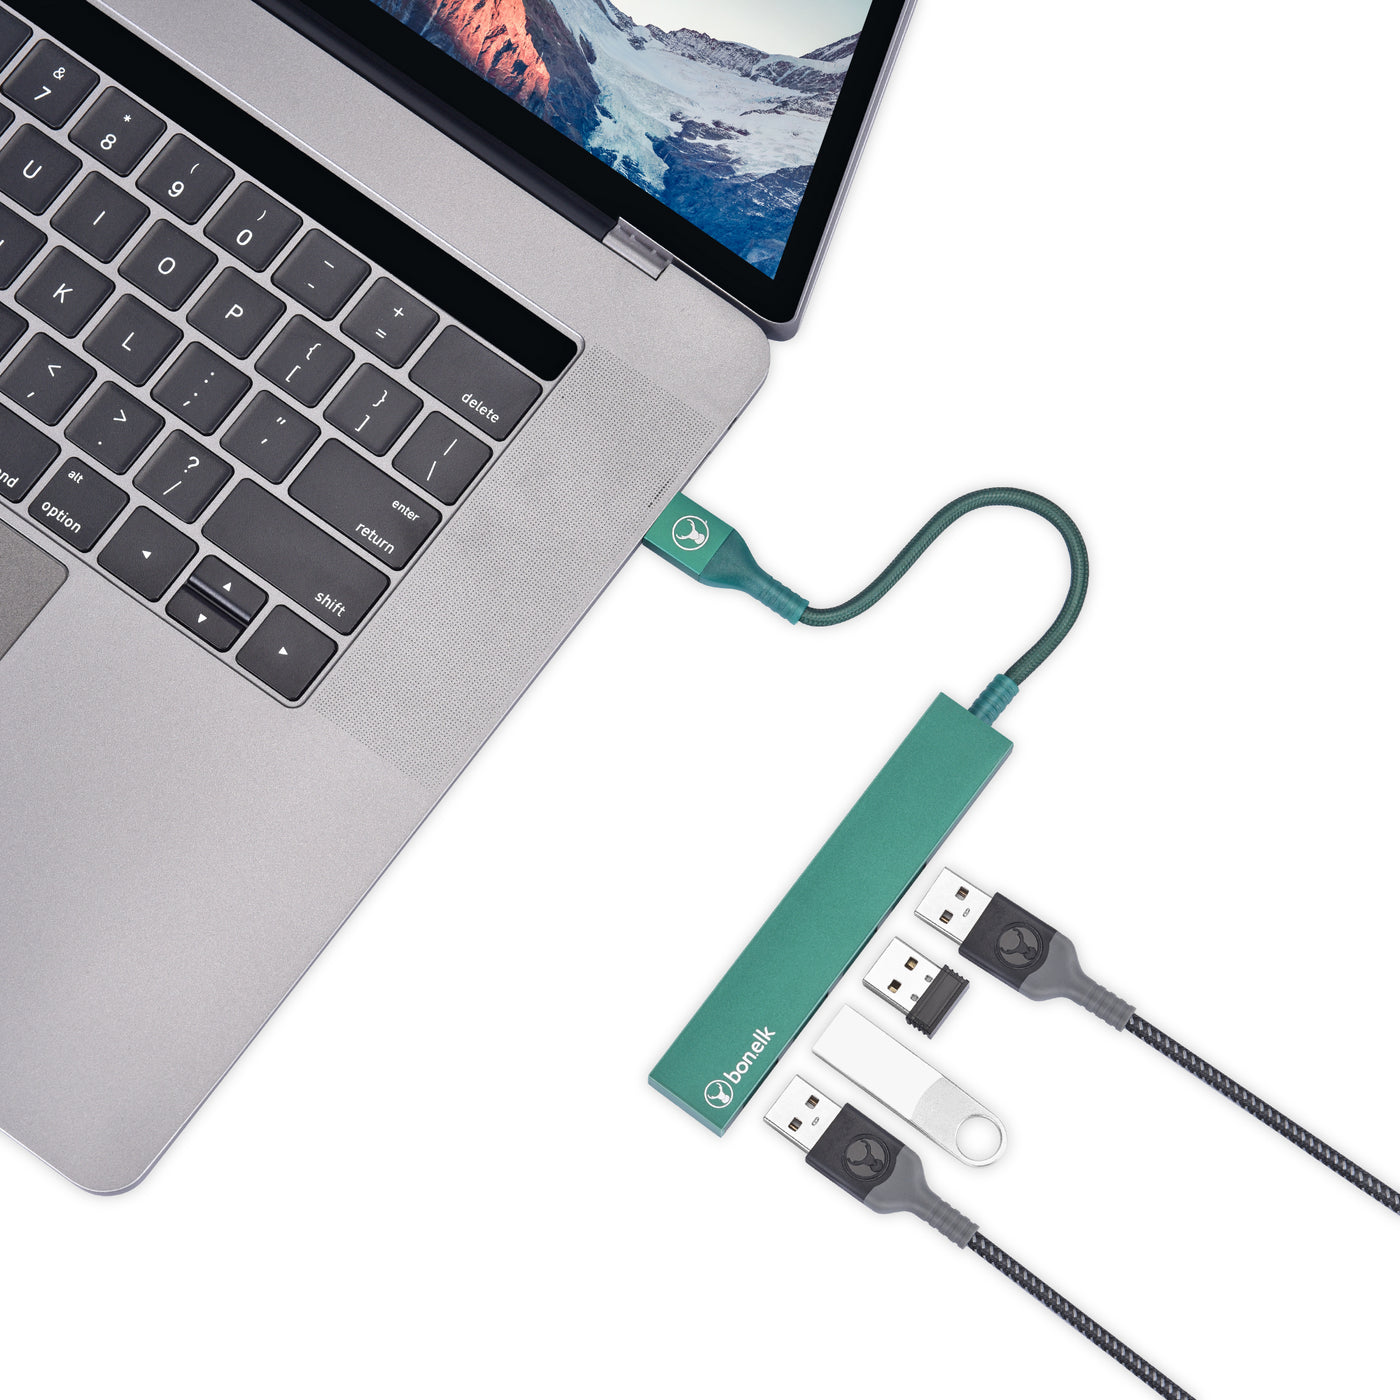 Bonelk Long-Life USB-A to 4 Port USB 3.0 Slim Hub - Green